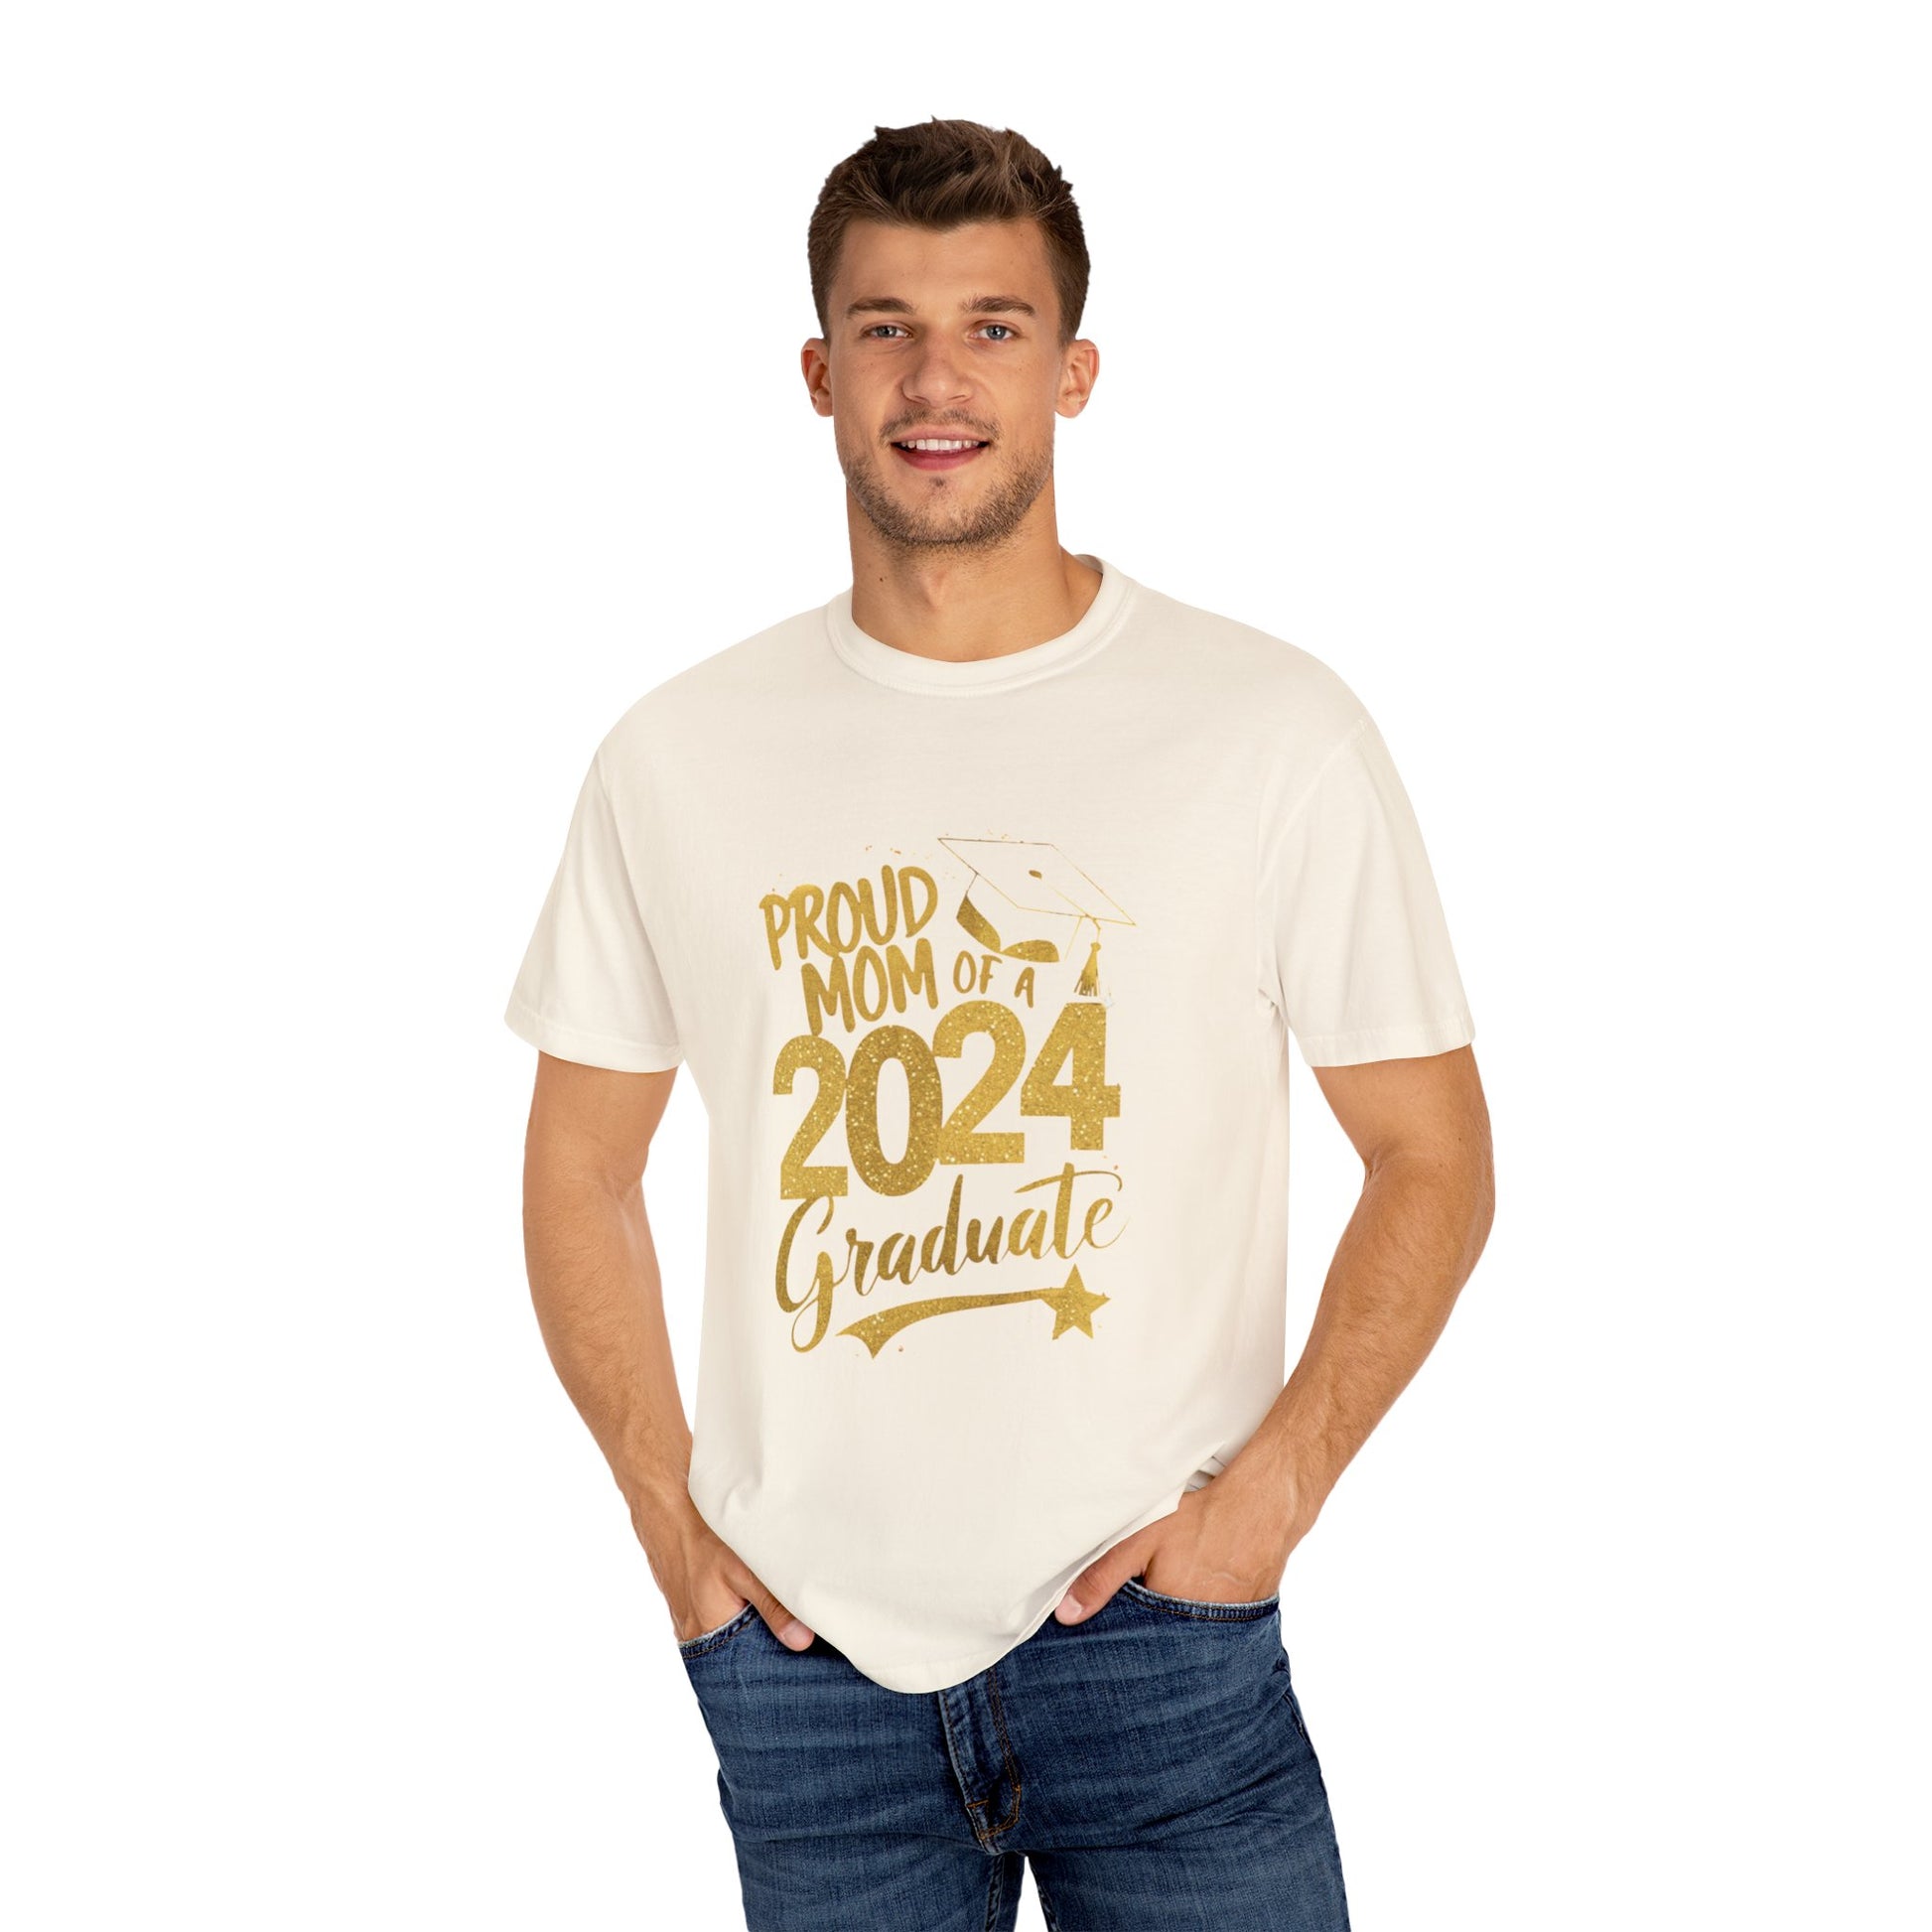 Proud of Mom 2024 Graduate Unisex Garment-dyed T-shirt Cotton Funny Humorous Graphic Soft Premium Unisex Men Women Ivory T-shirt Birthday Gift-45